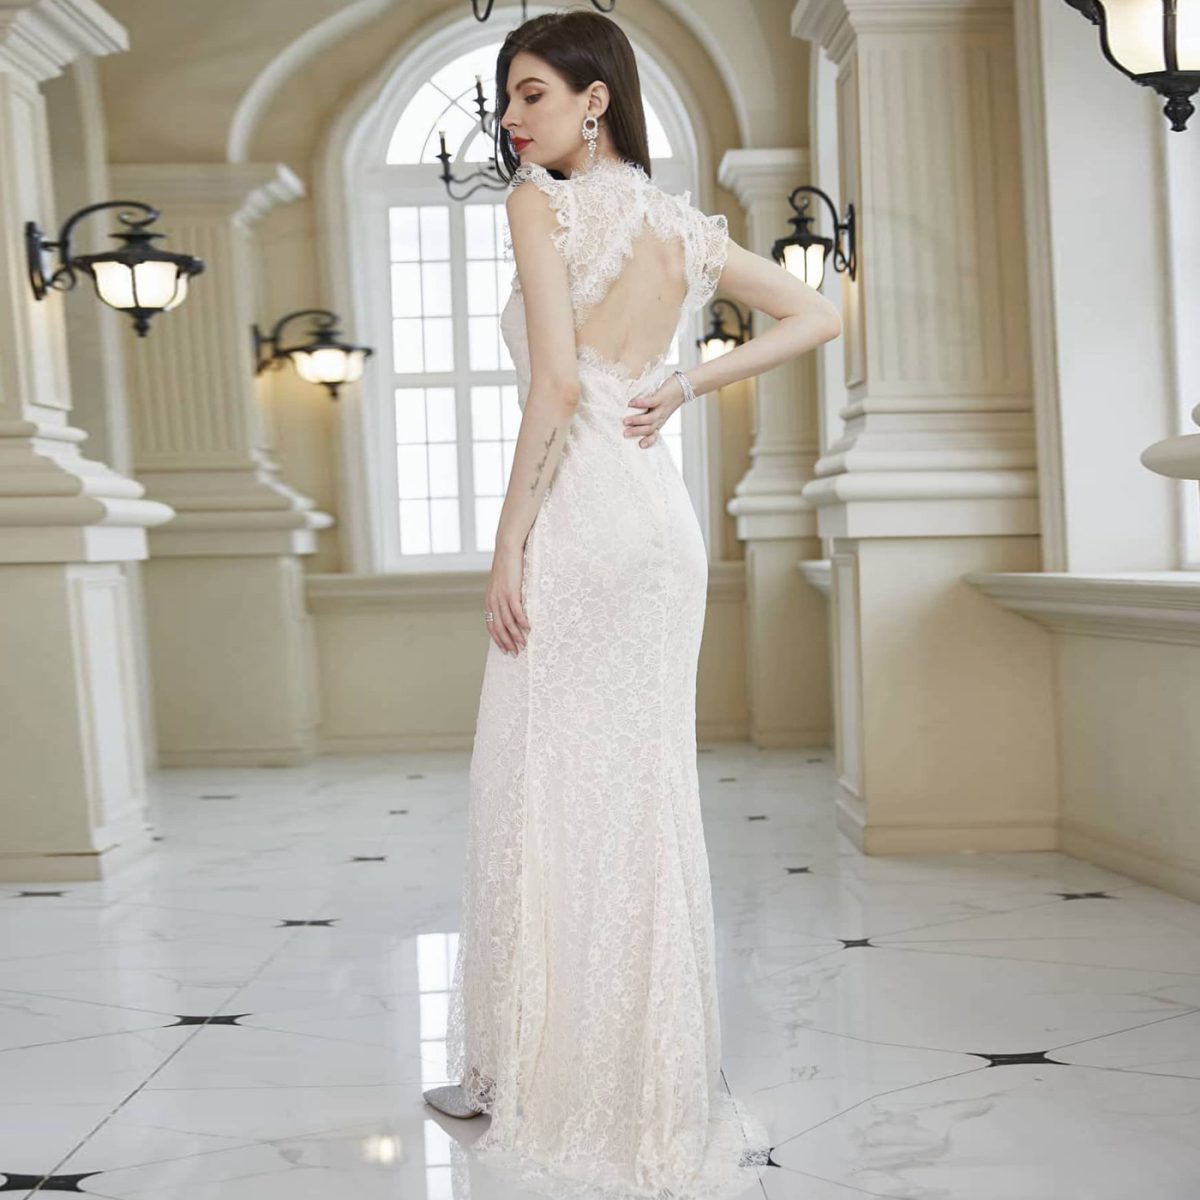 Slim Sleeveless See through Wedding Dress - Wedding dresses - Uniqistic.com